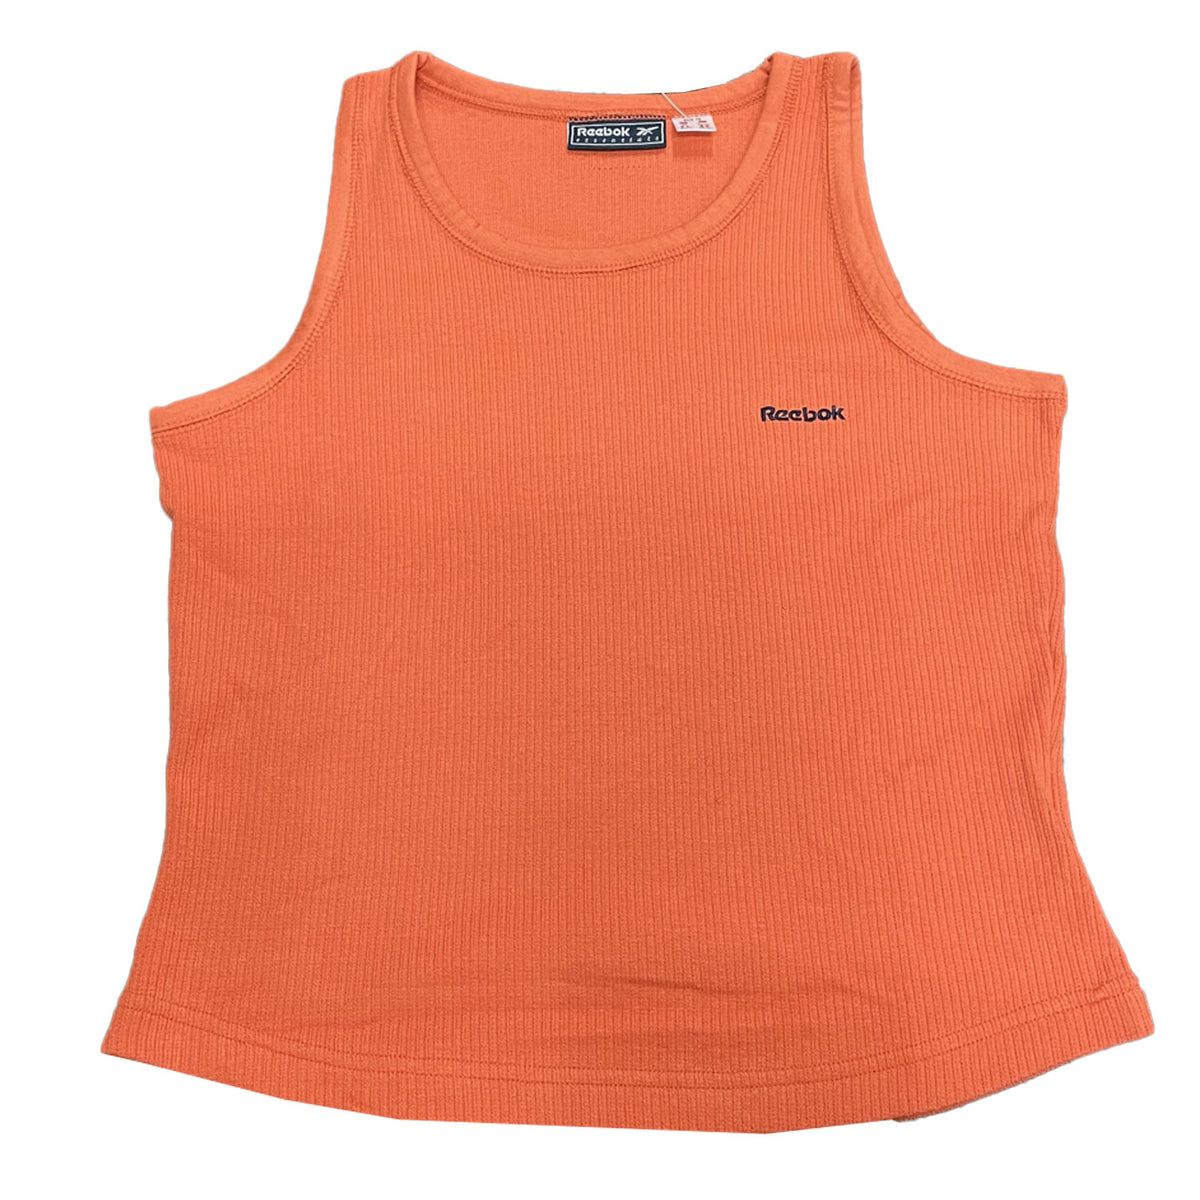 Reebok Womens Athletic Department Vest - Orange - UK Size 12